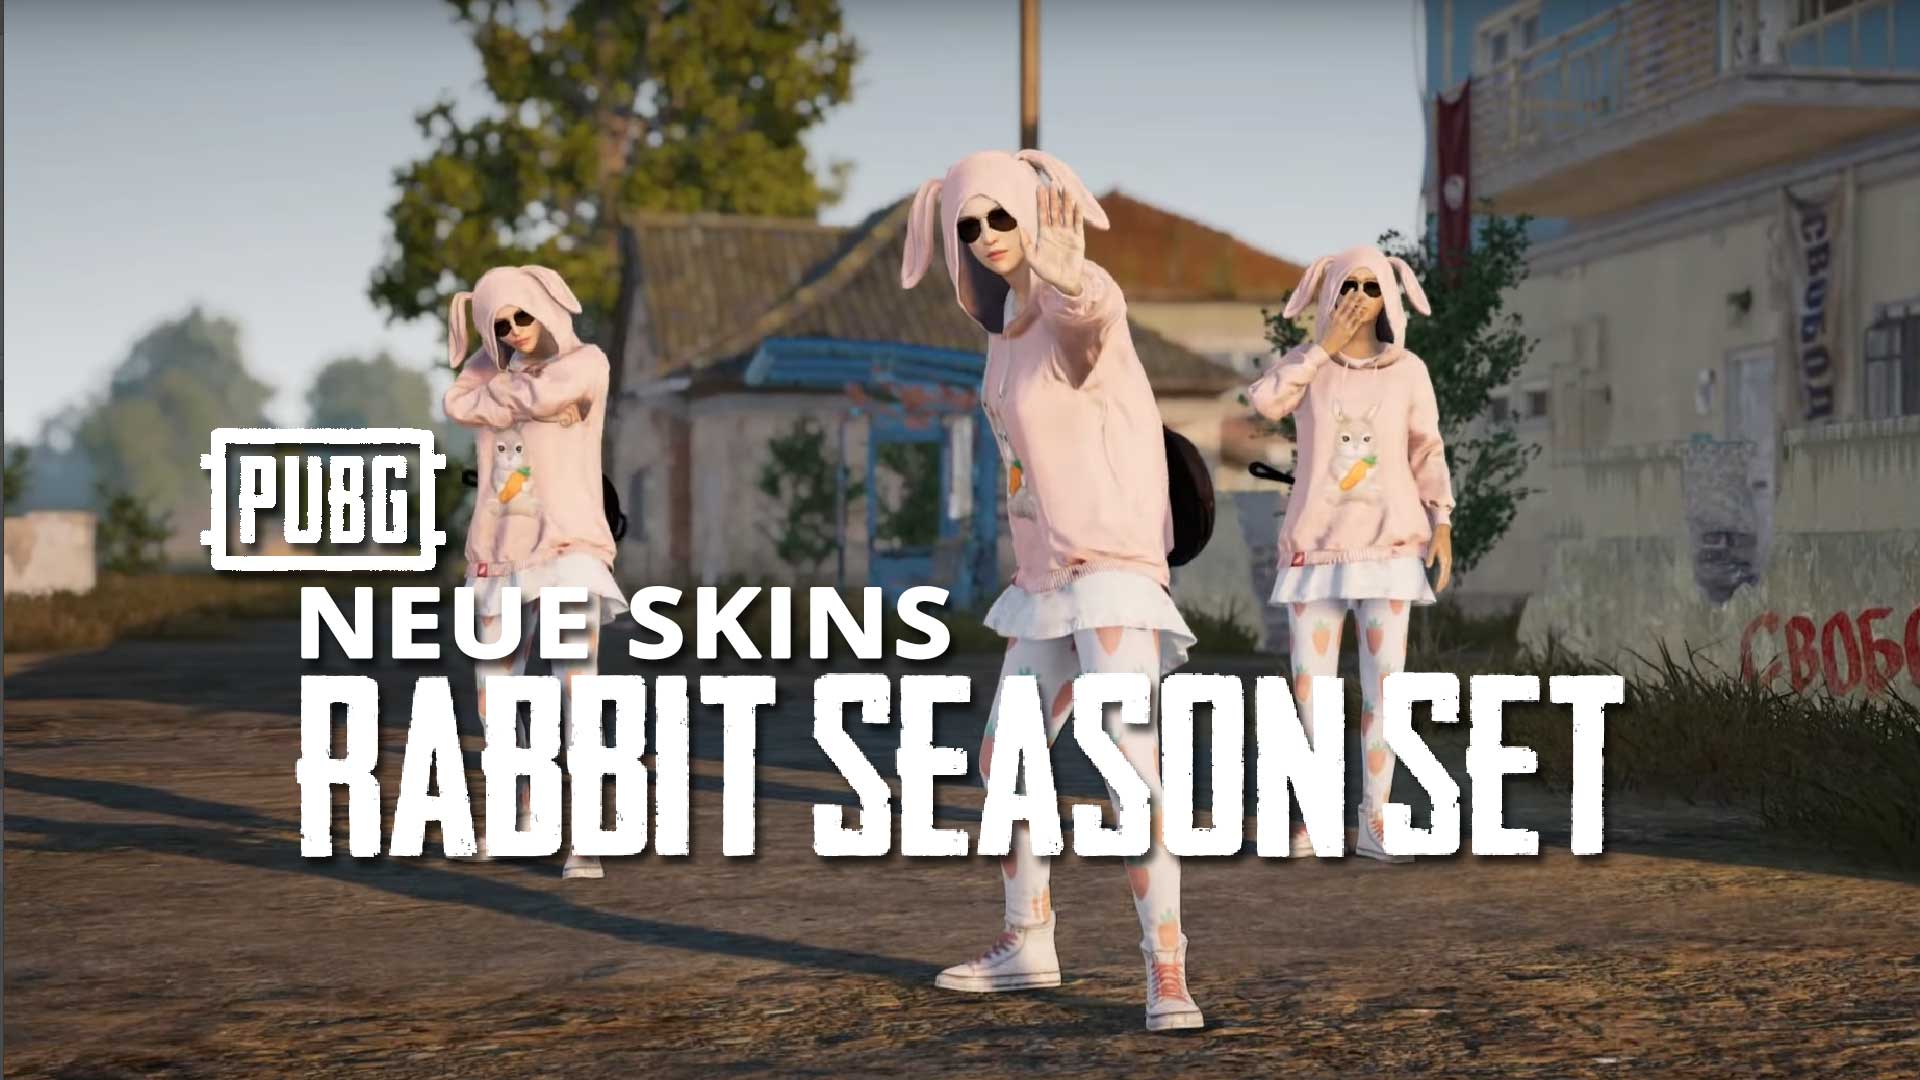 pubg rabbit season skins